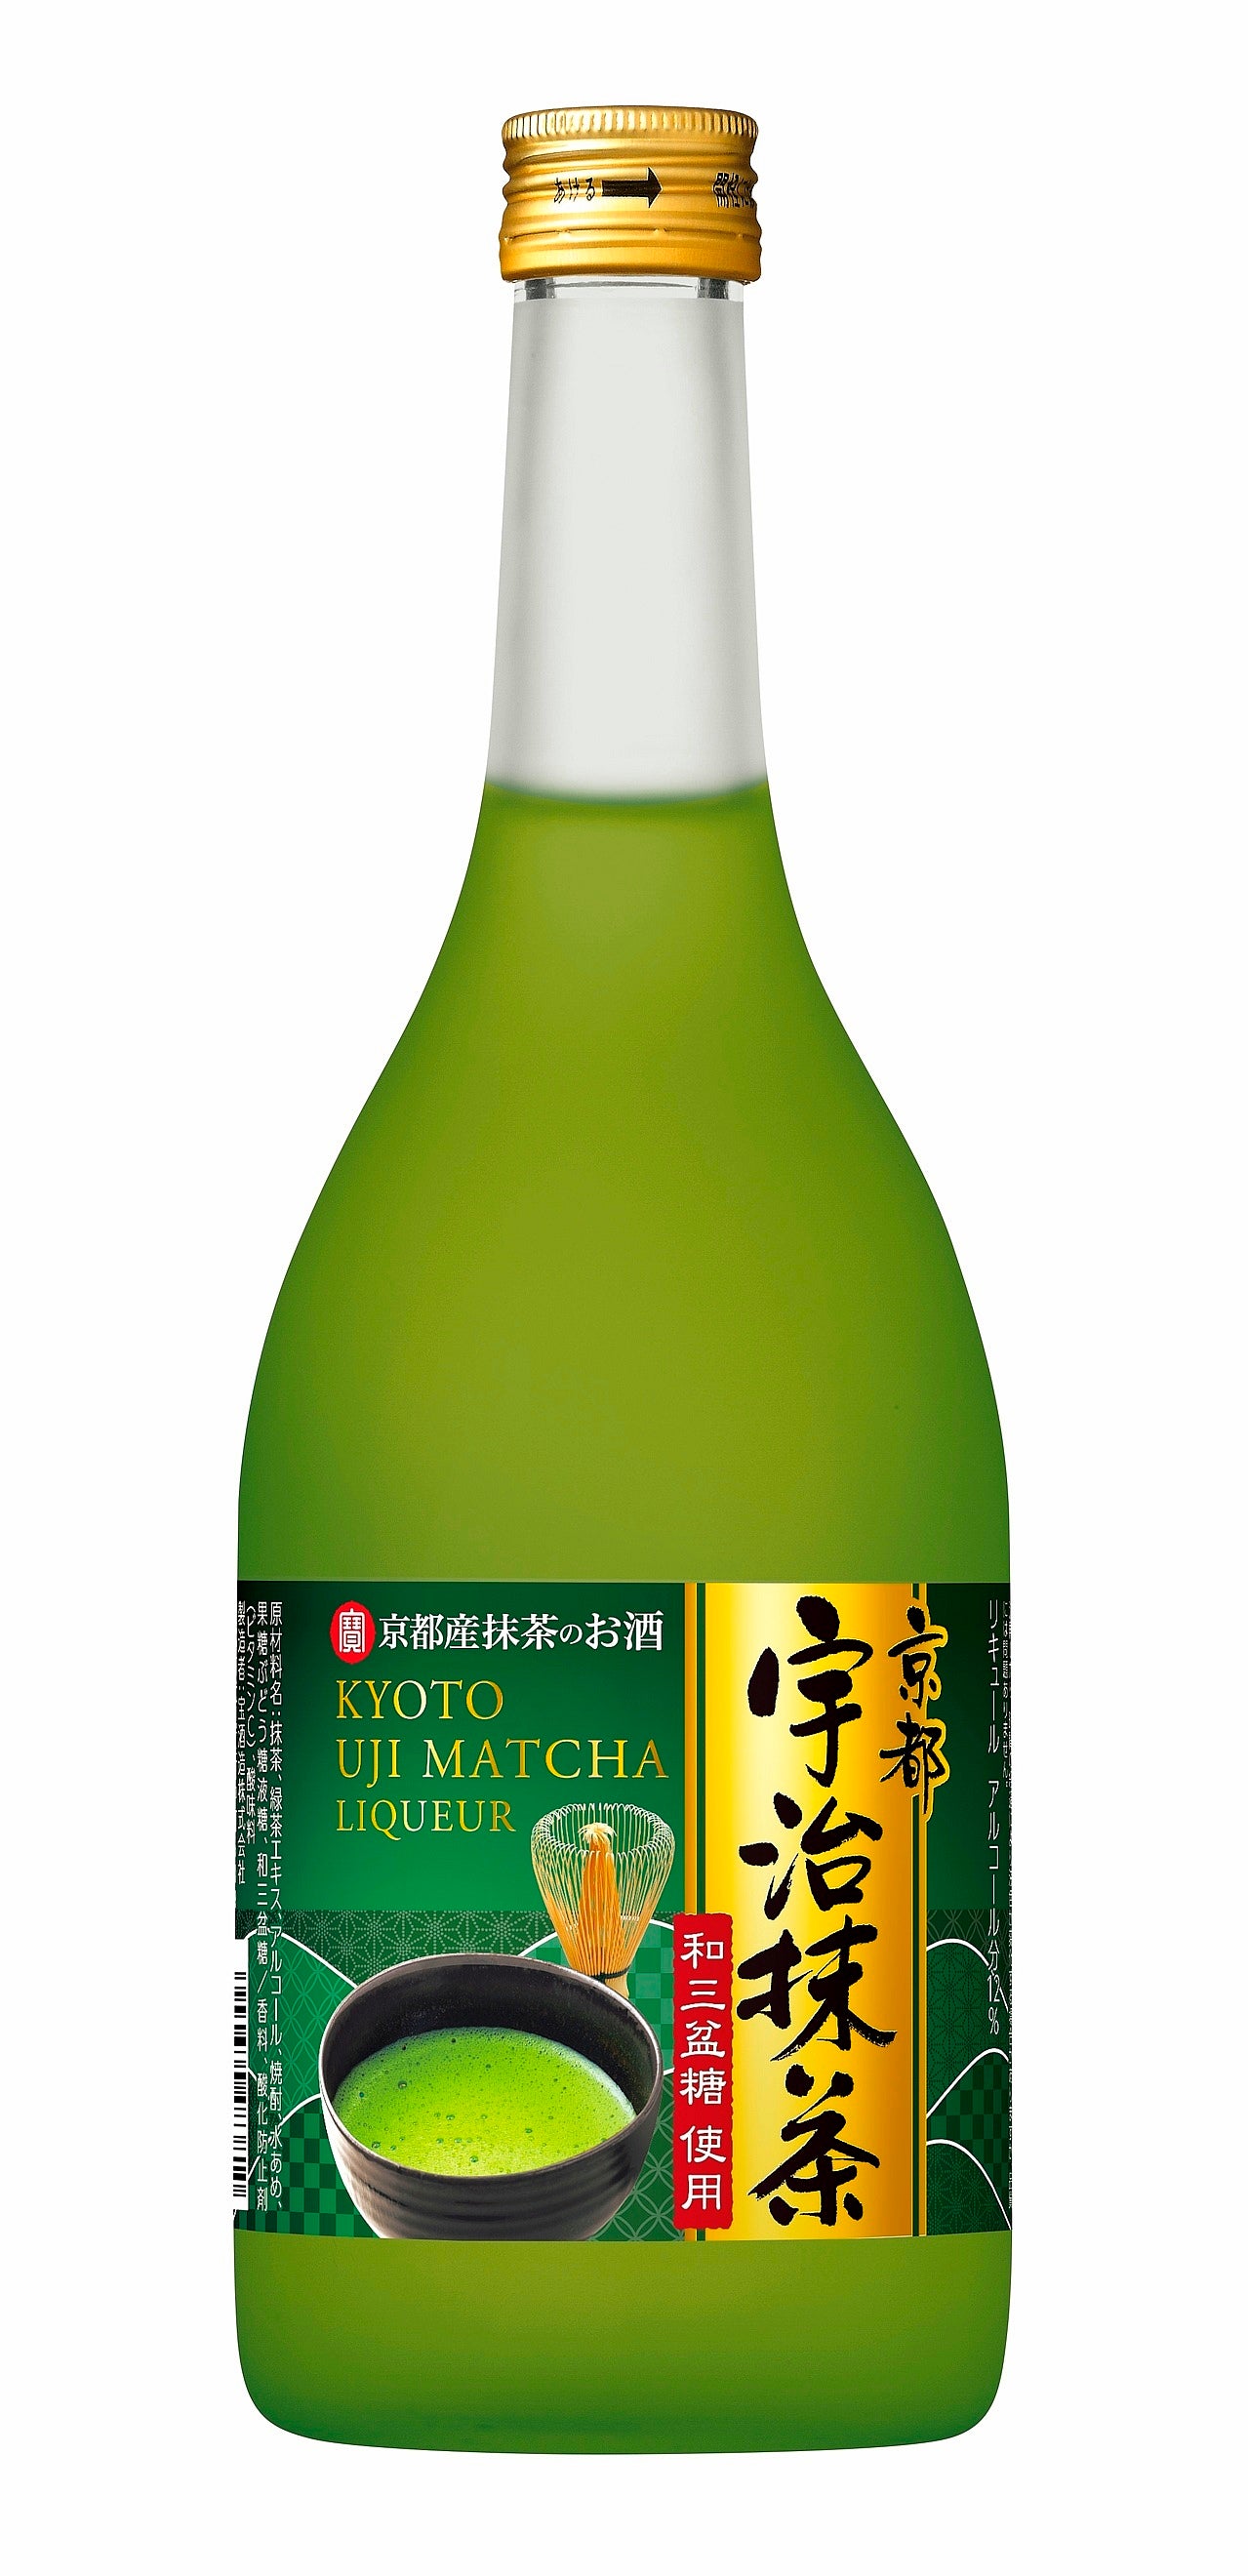 Kyoto Matcha Liquor
京都宇治抹茶酒 720ml 12%vol